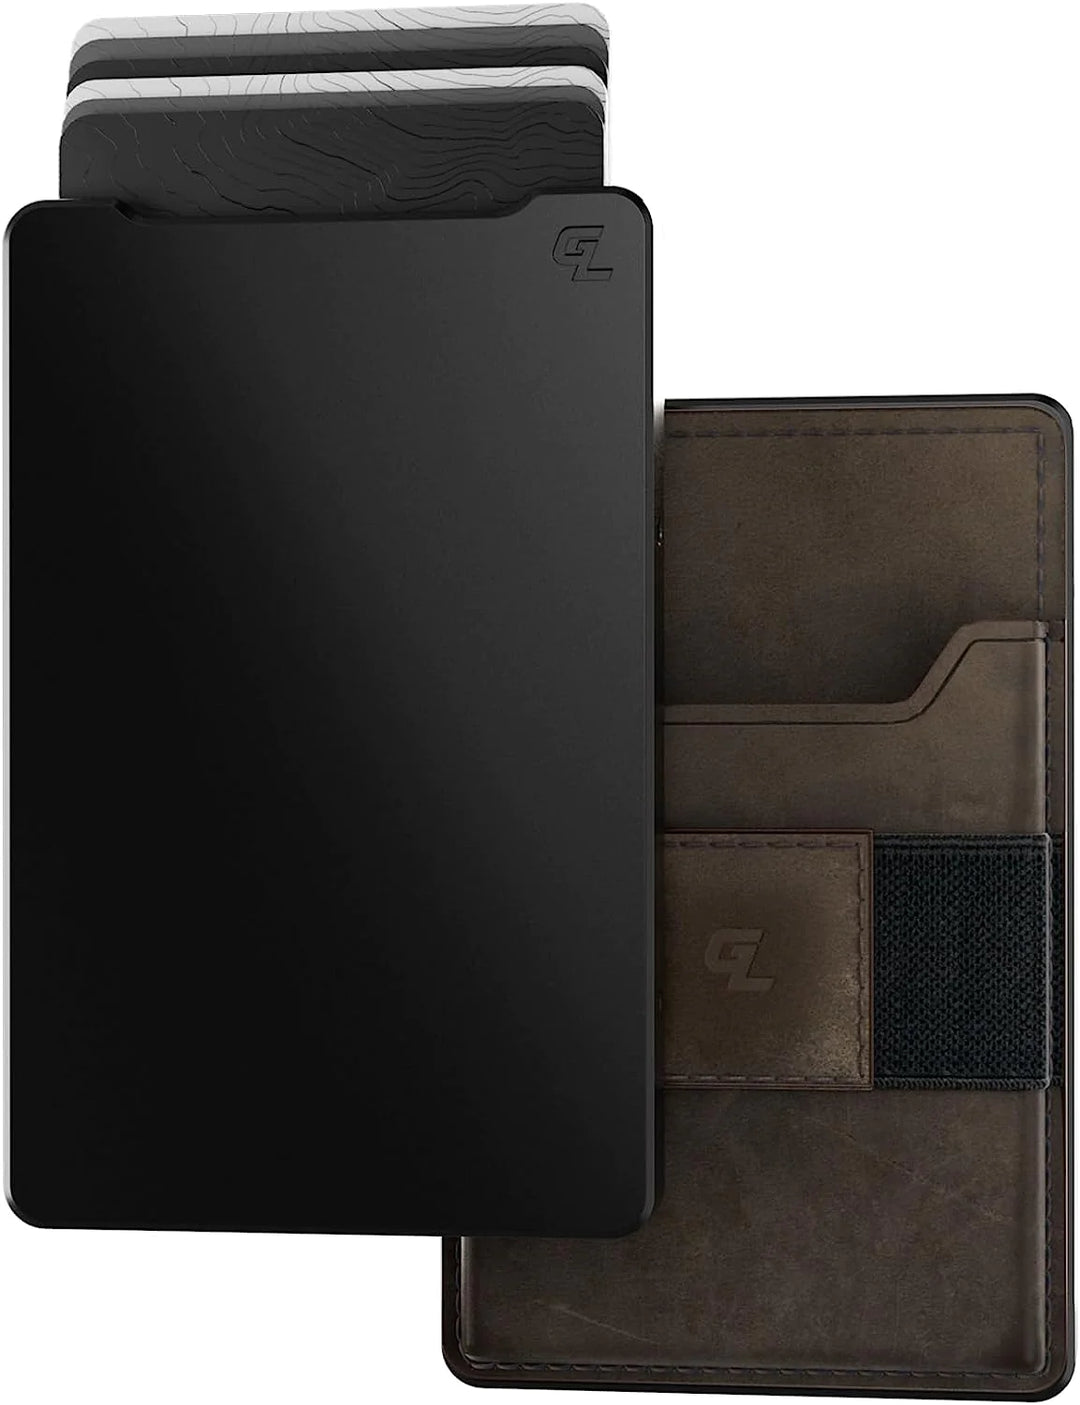 Leather Wallet, Black/Brown